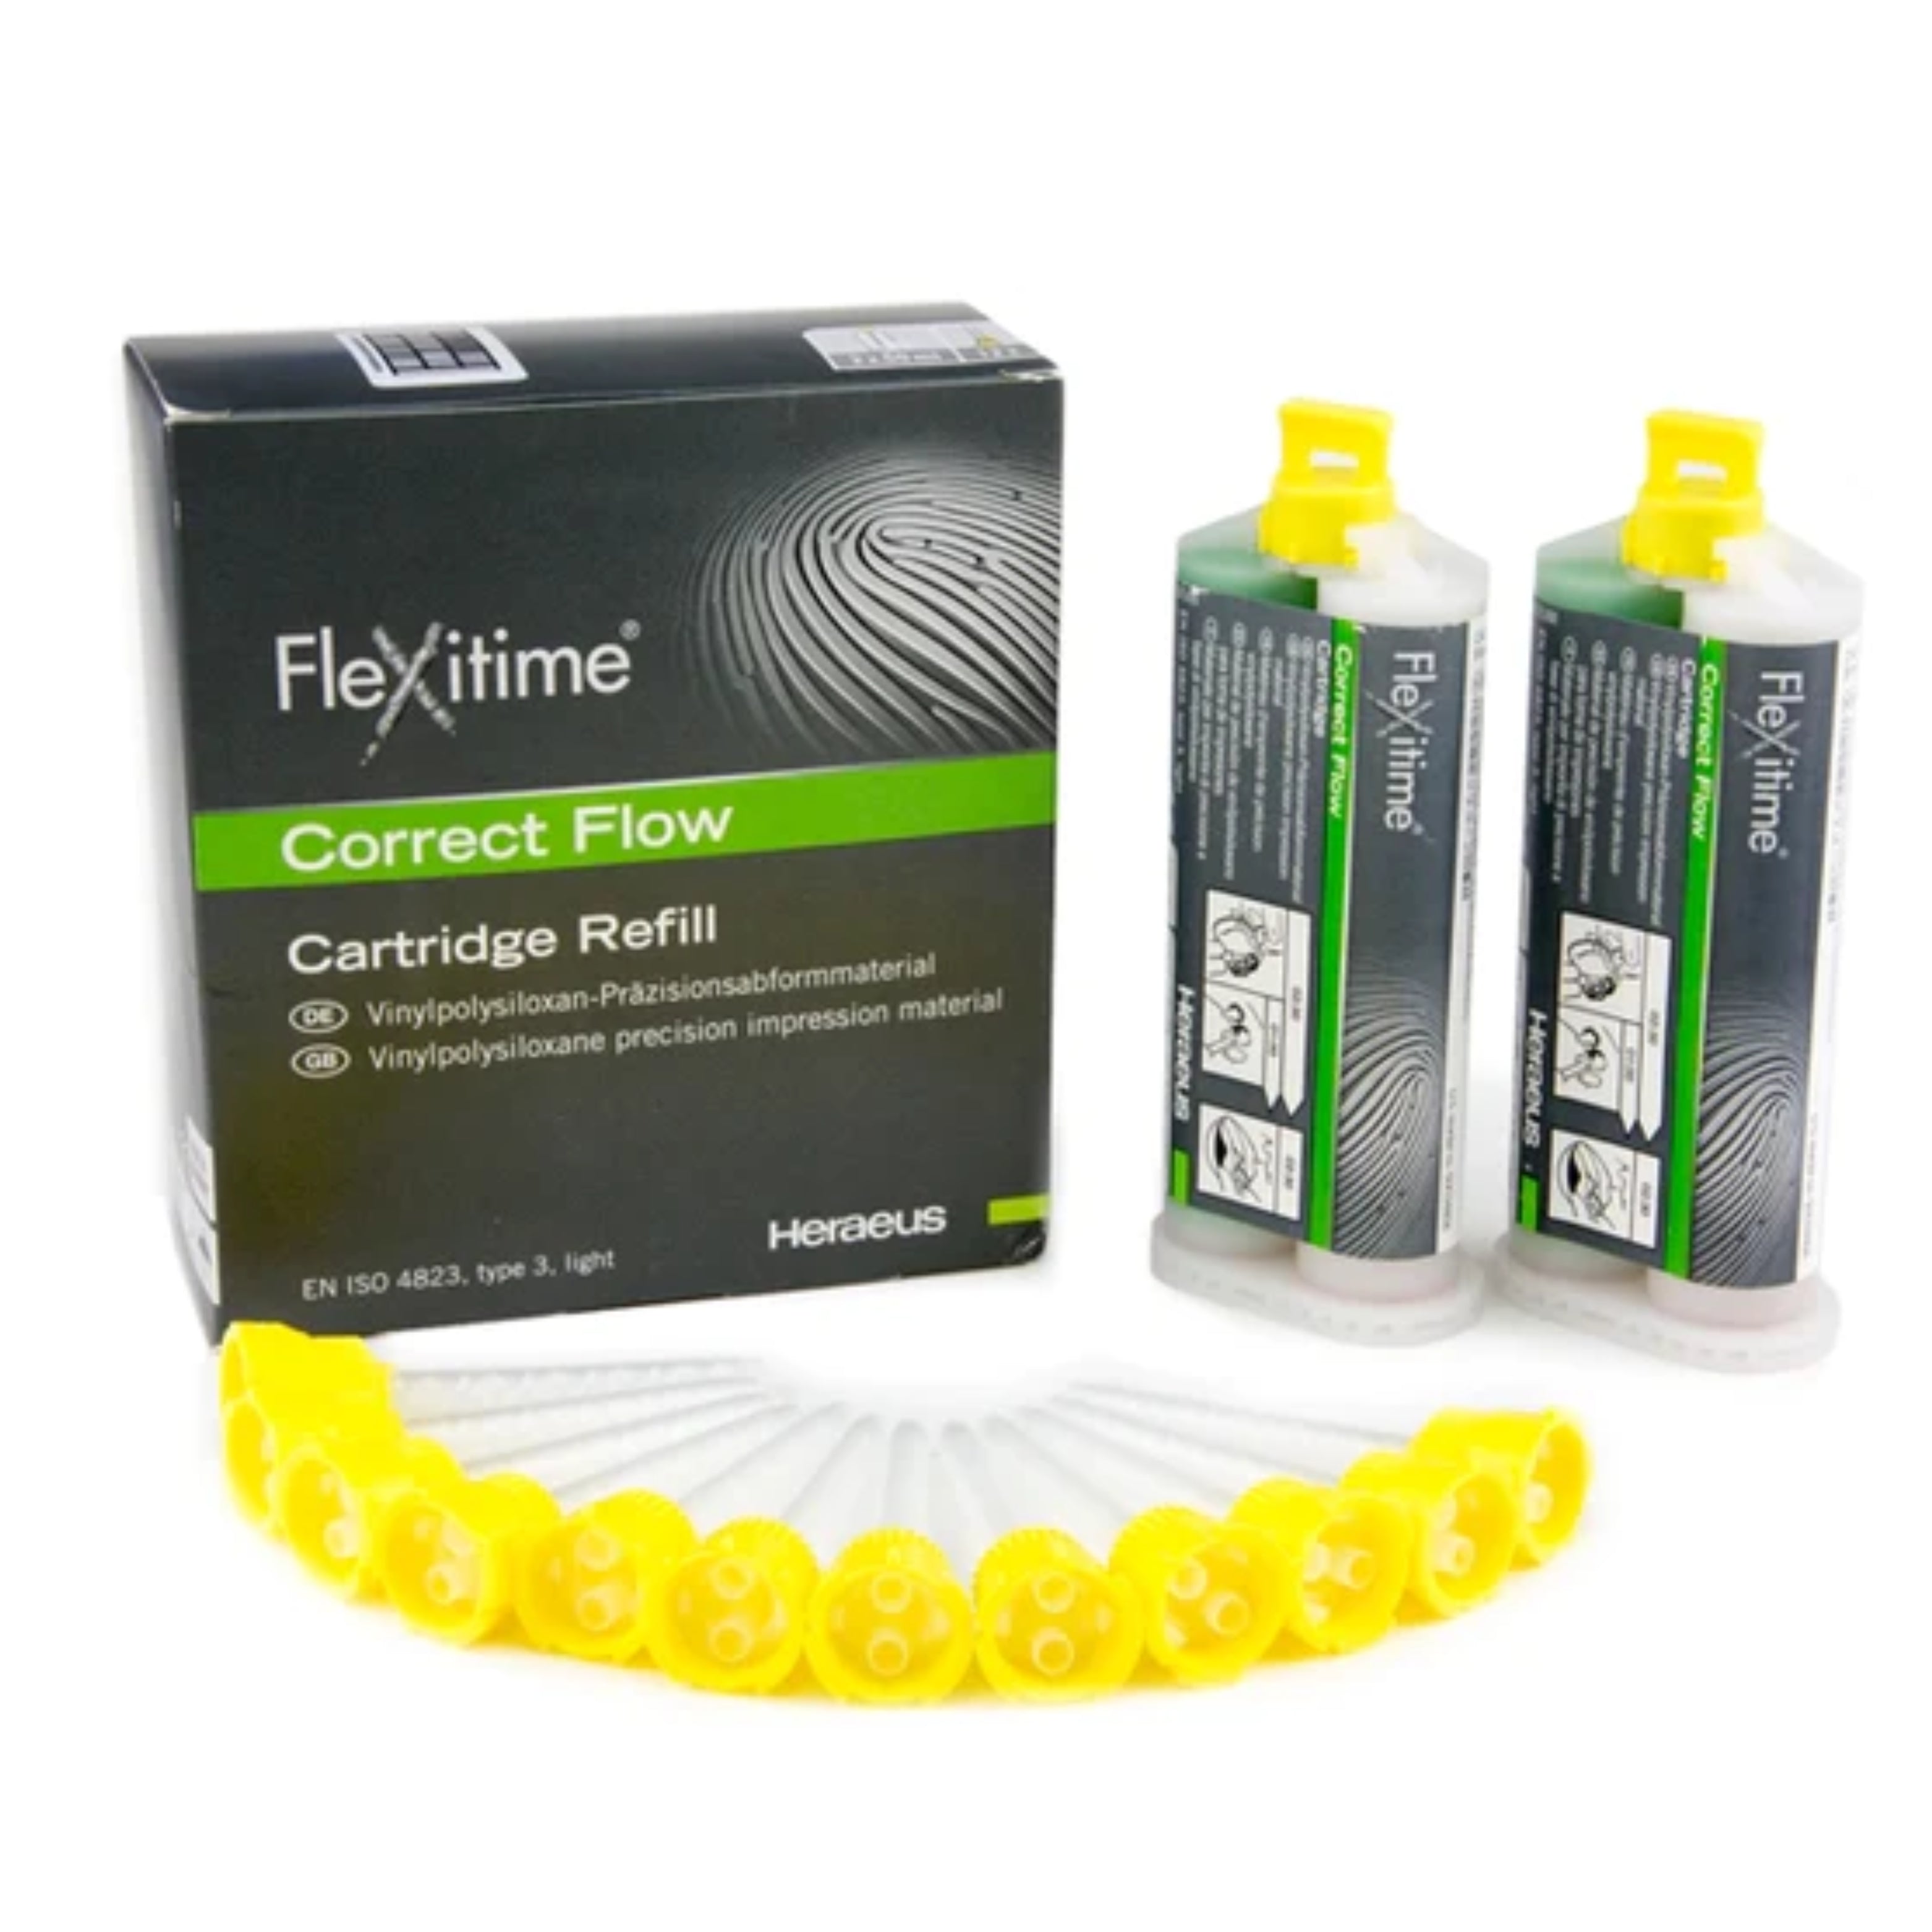 kulzer-flexitime-correct-flow-dental-impression-materials-refill